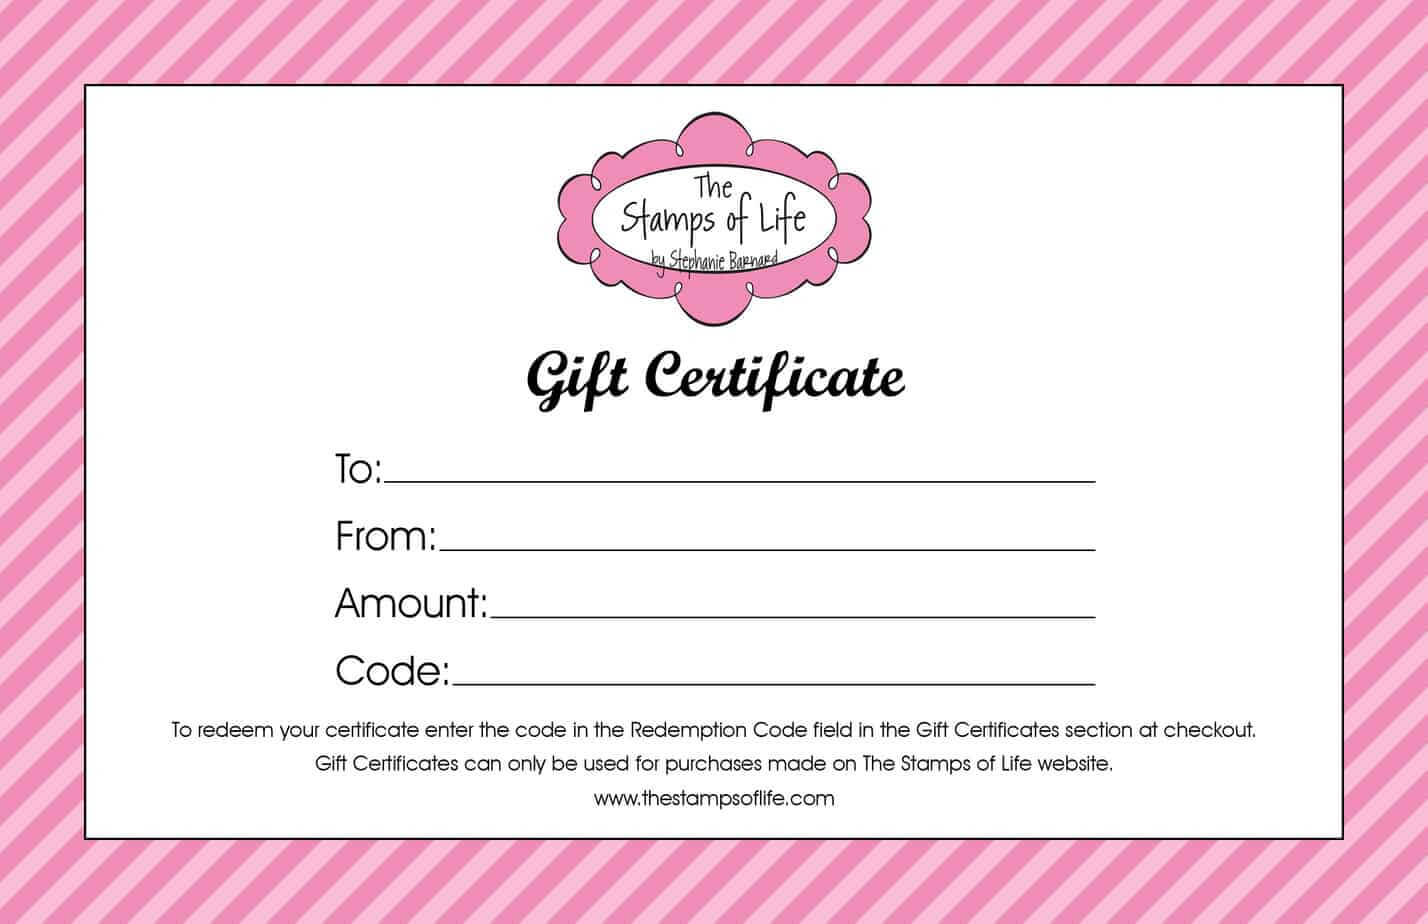 Free Gift Certificate Template Word | Dattstar Regarding Microsoft Gift Certificate Template Free Word